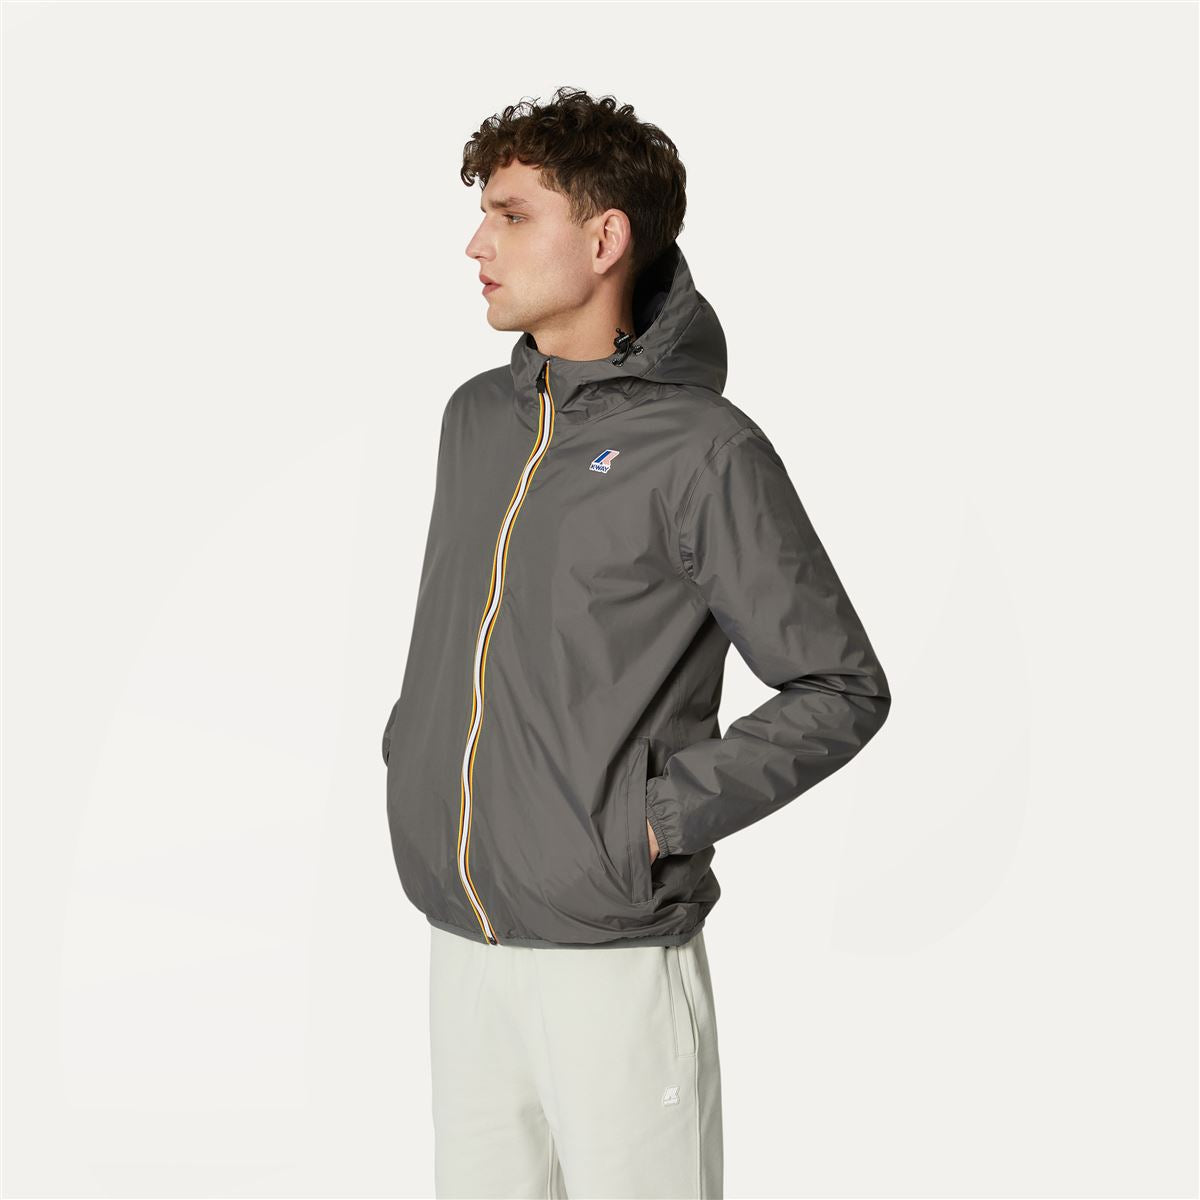 Claude Warm - Unisex Full Zip Waterproof Padded Jacket in Grey Smoked